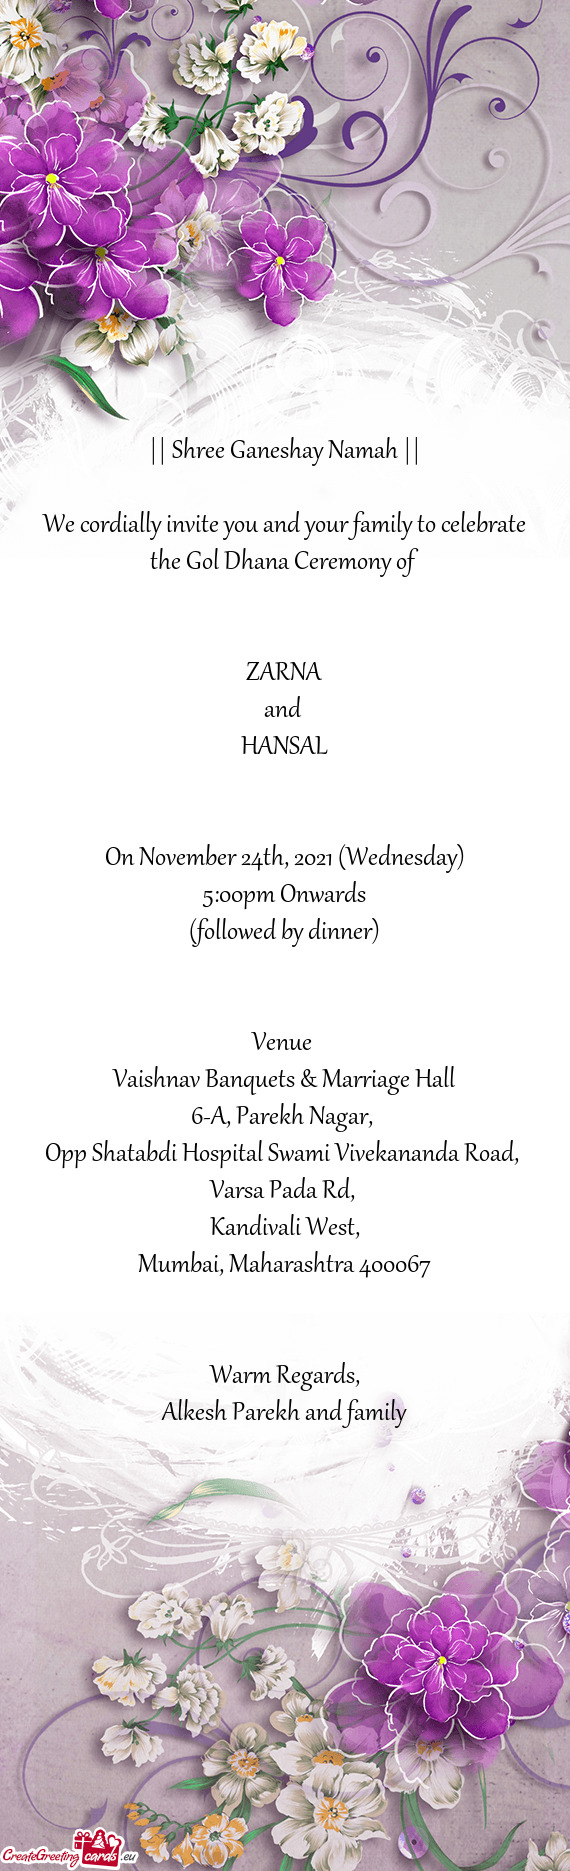 Vaishnav Banquets & Marriage Hall